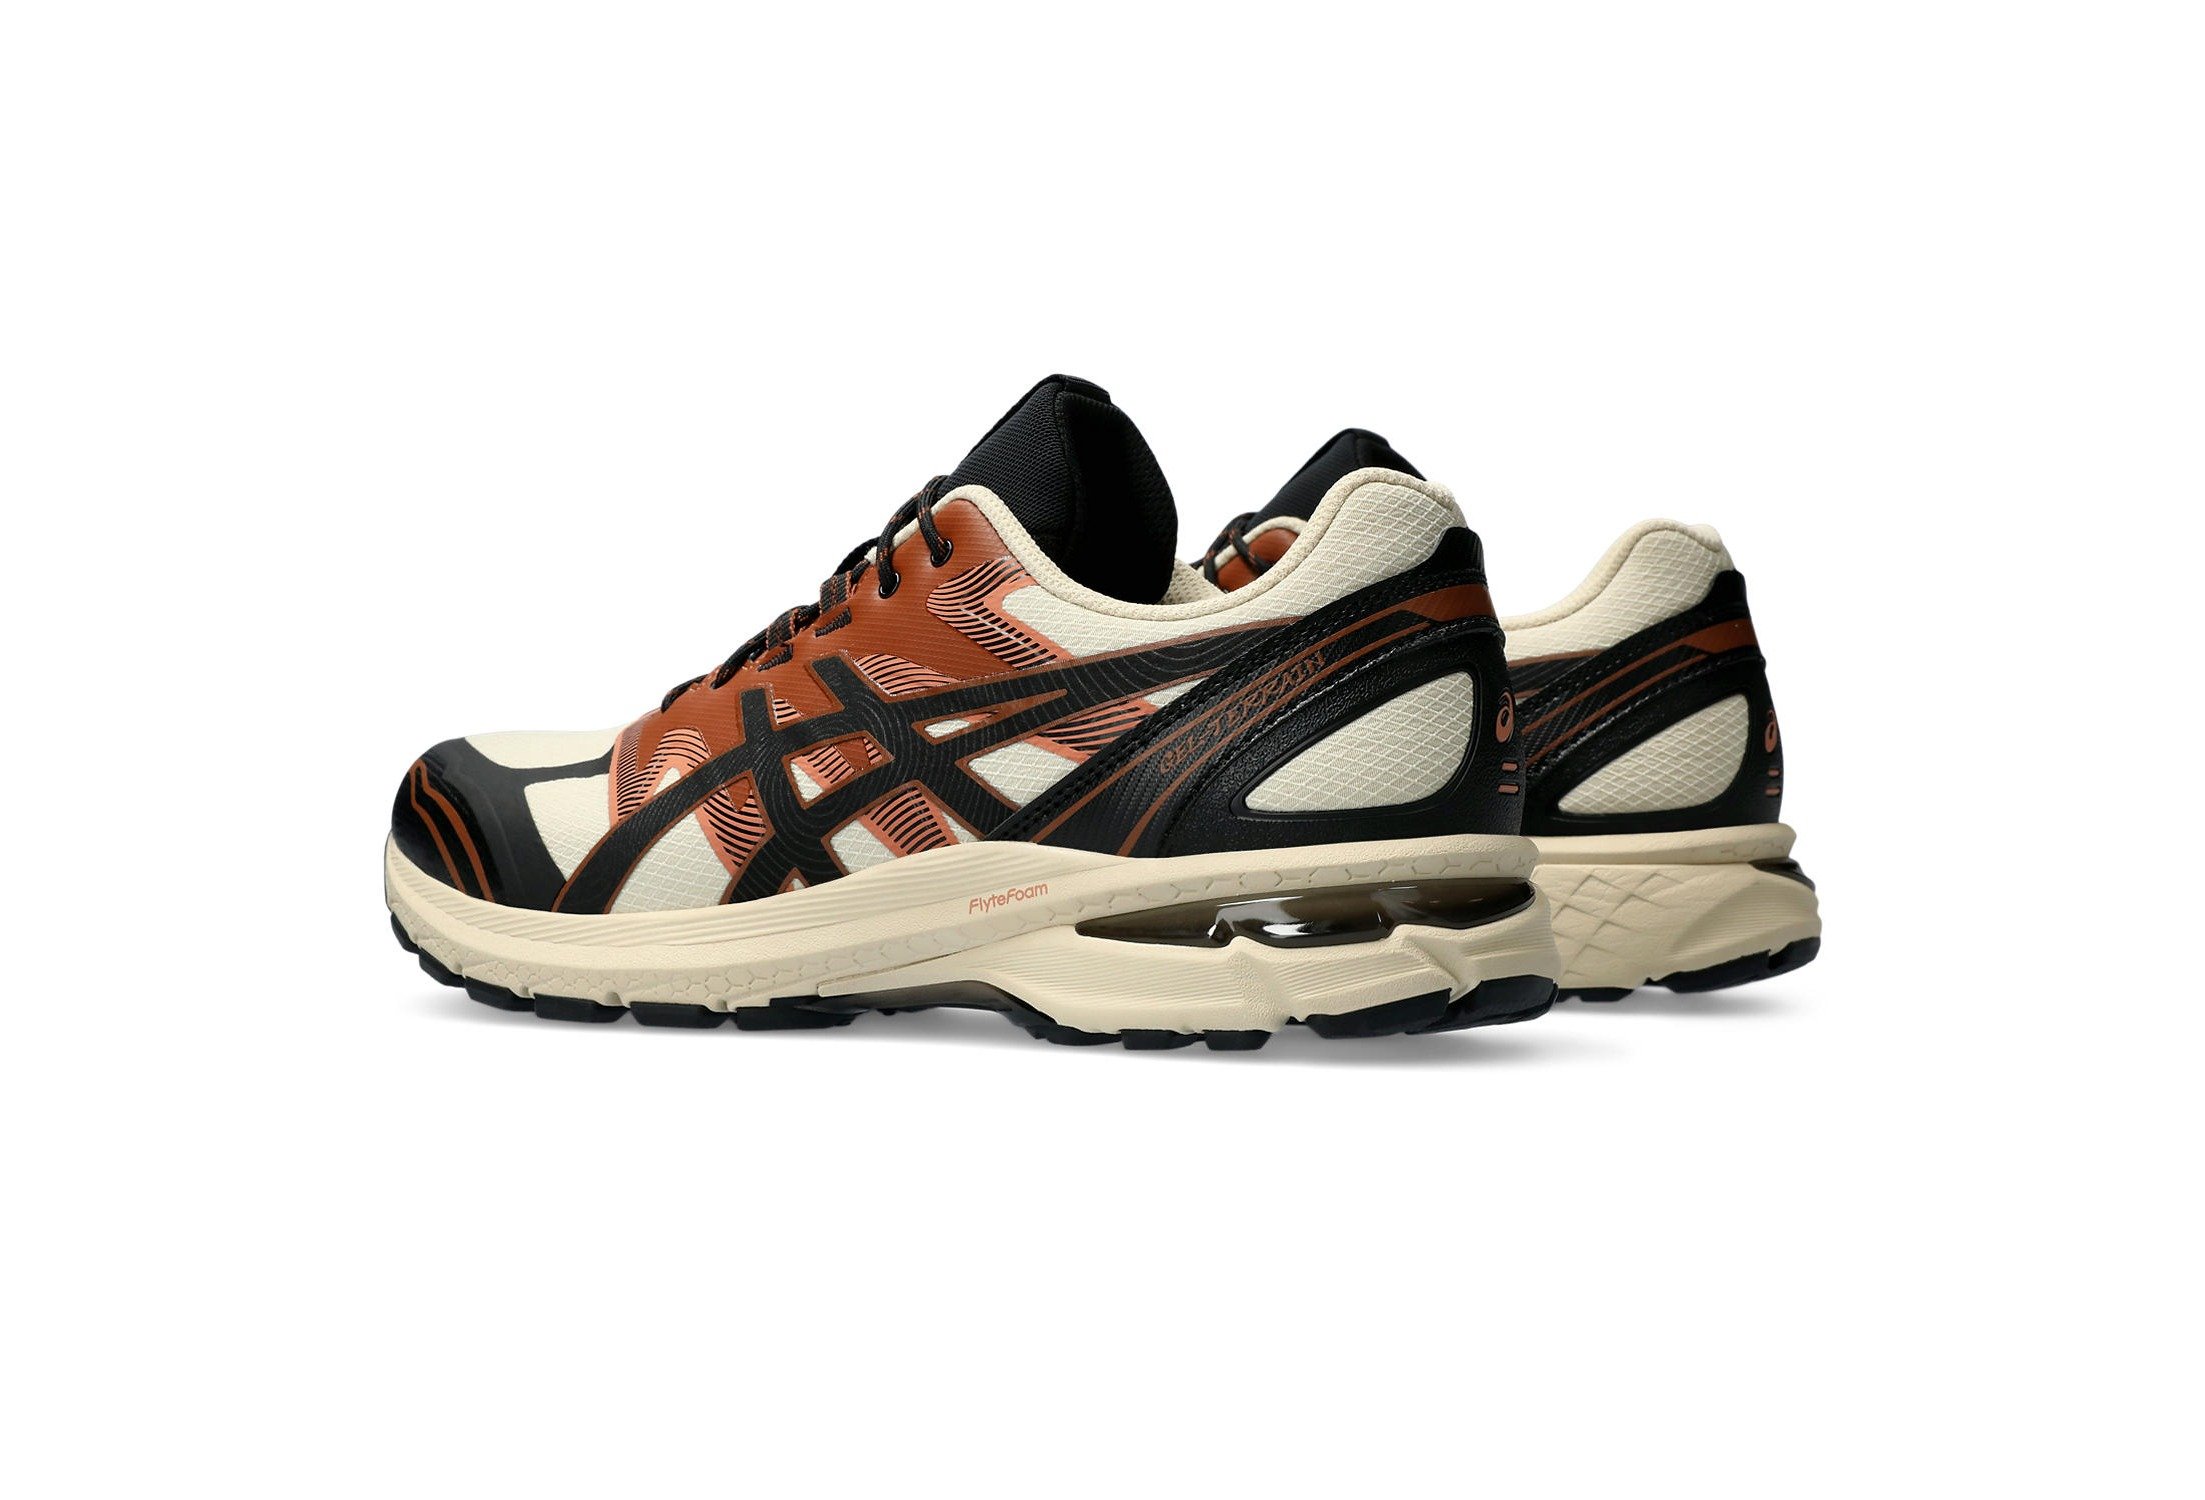 Buy Asics Gel Rocket 10 Badminton Shoes @ Lowest Price - Sportsuncle